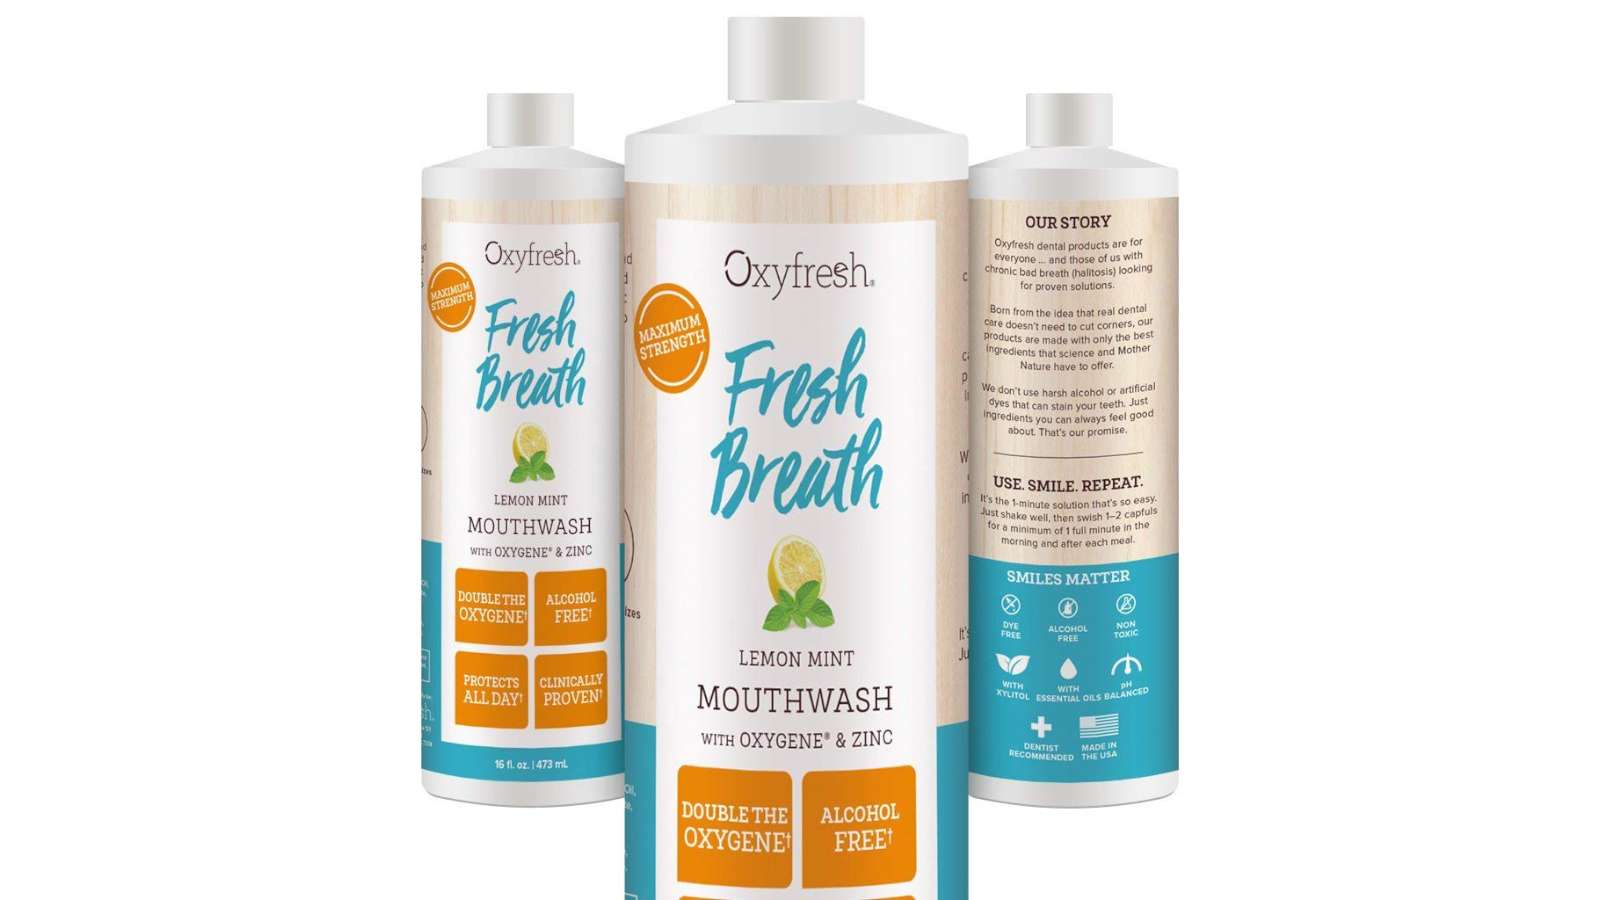 bottle of oxyfresh premium fresh breath lemon mint mouthwash 16 oz. + bad breath lemon mint toothpaste 5oz